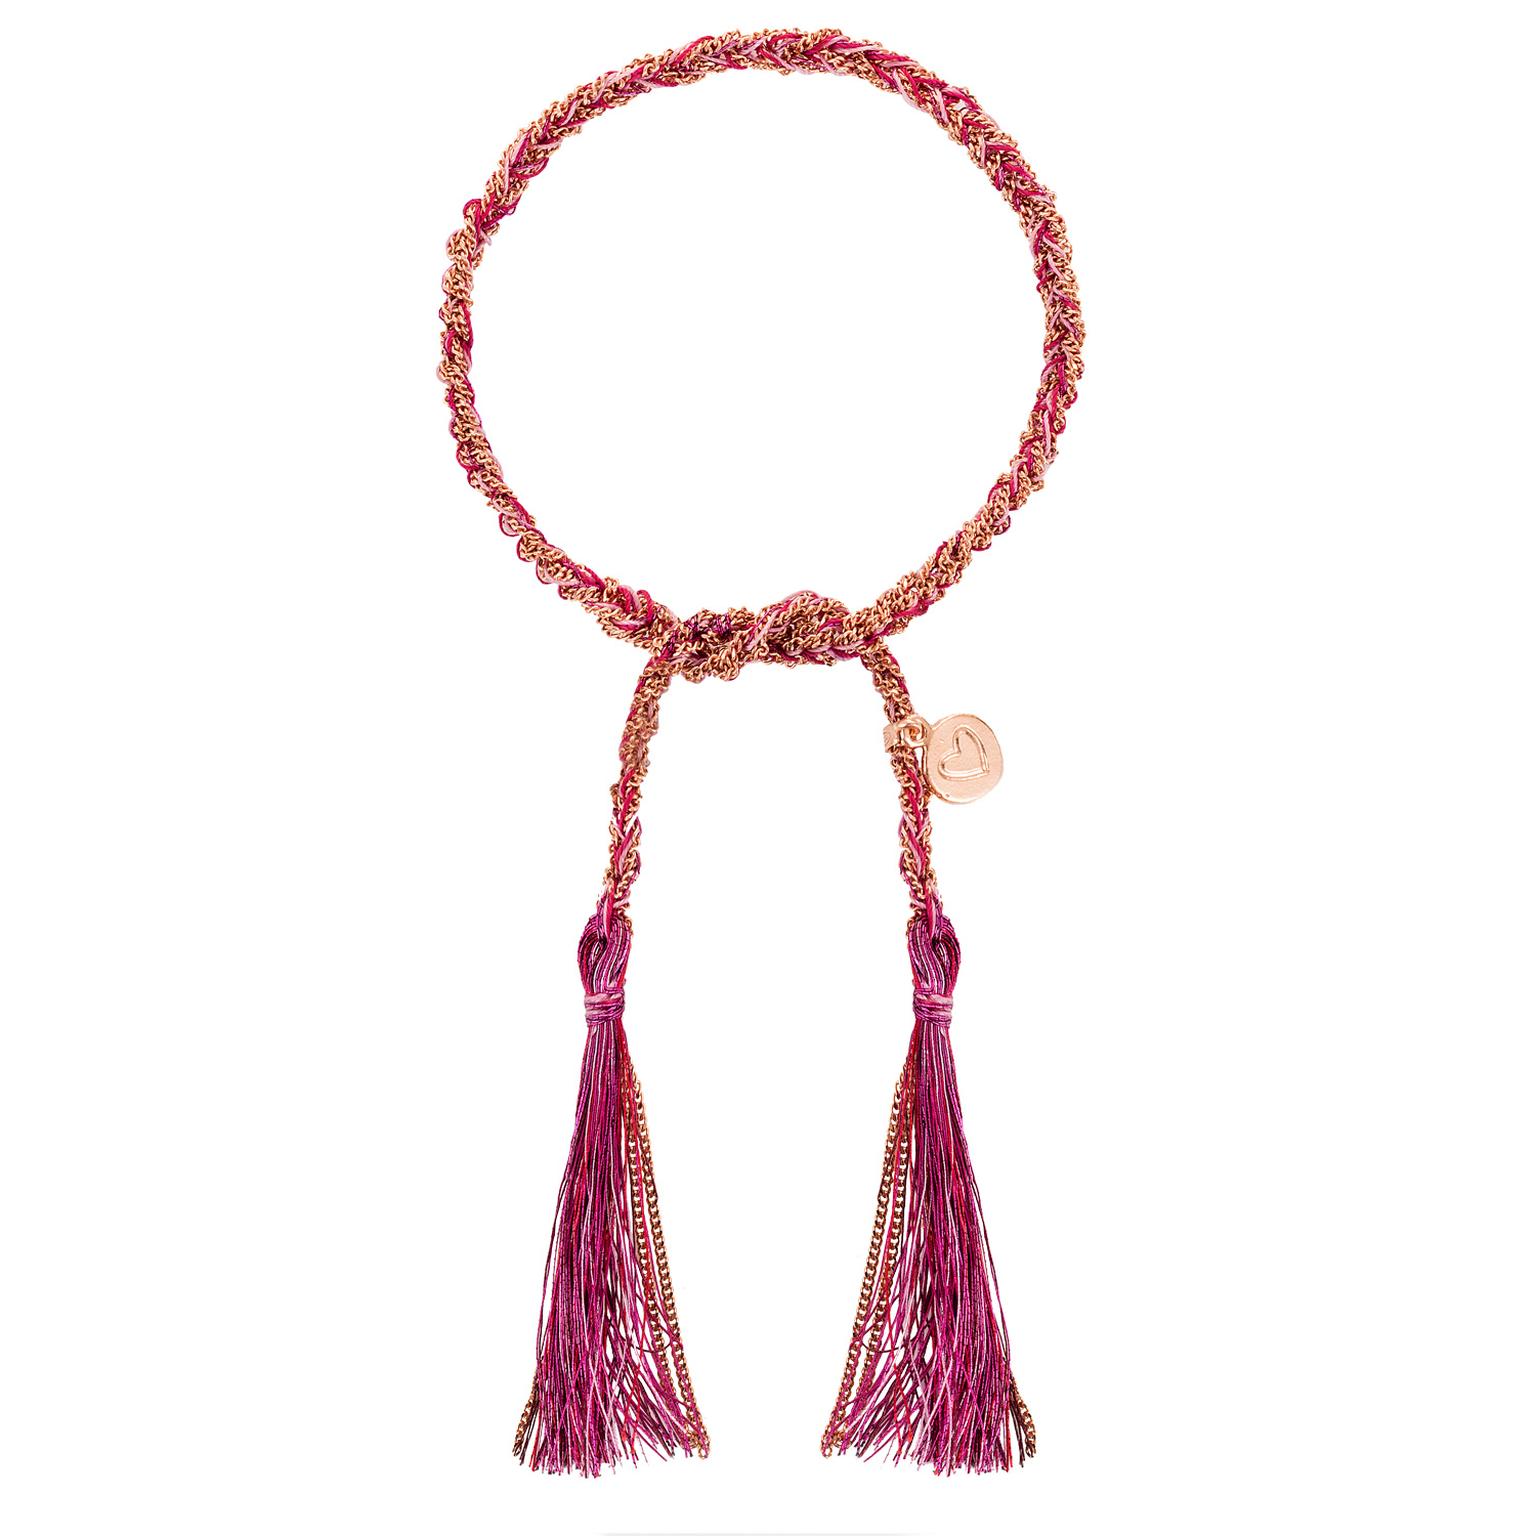 Carolina Bucci 'Lucky' bracelet in pink